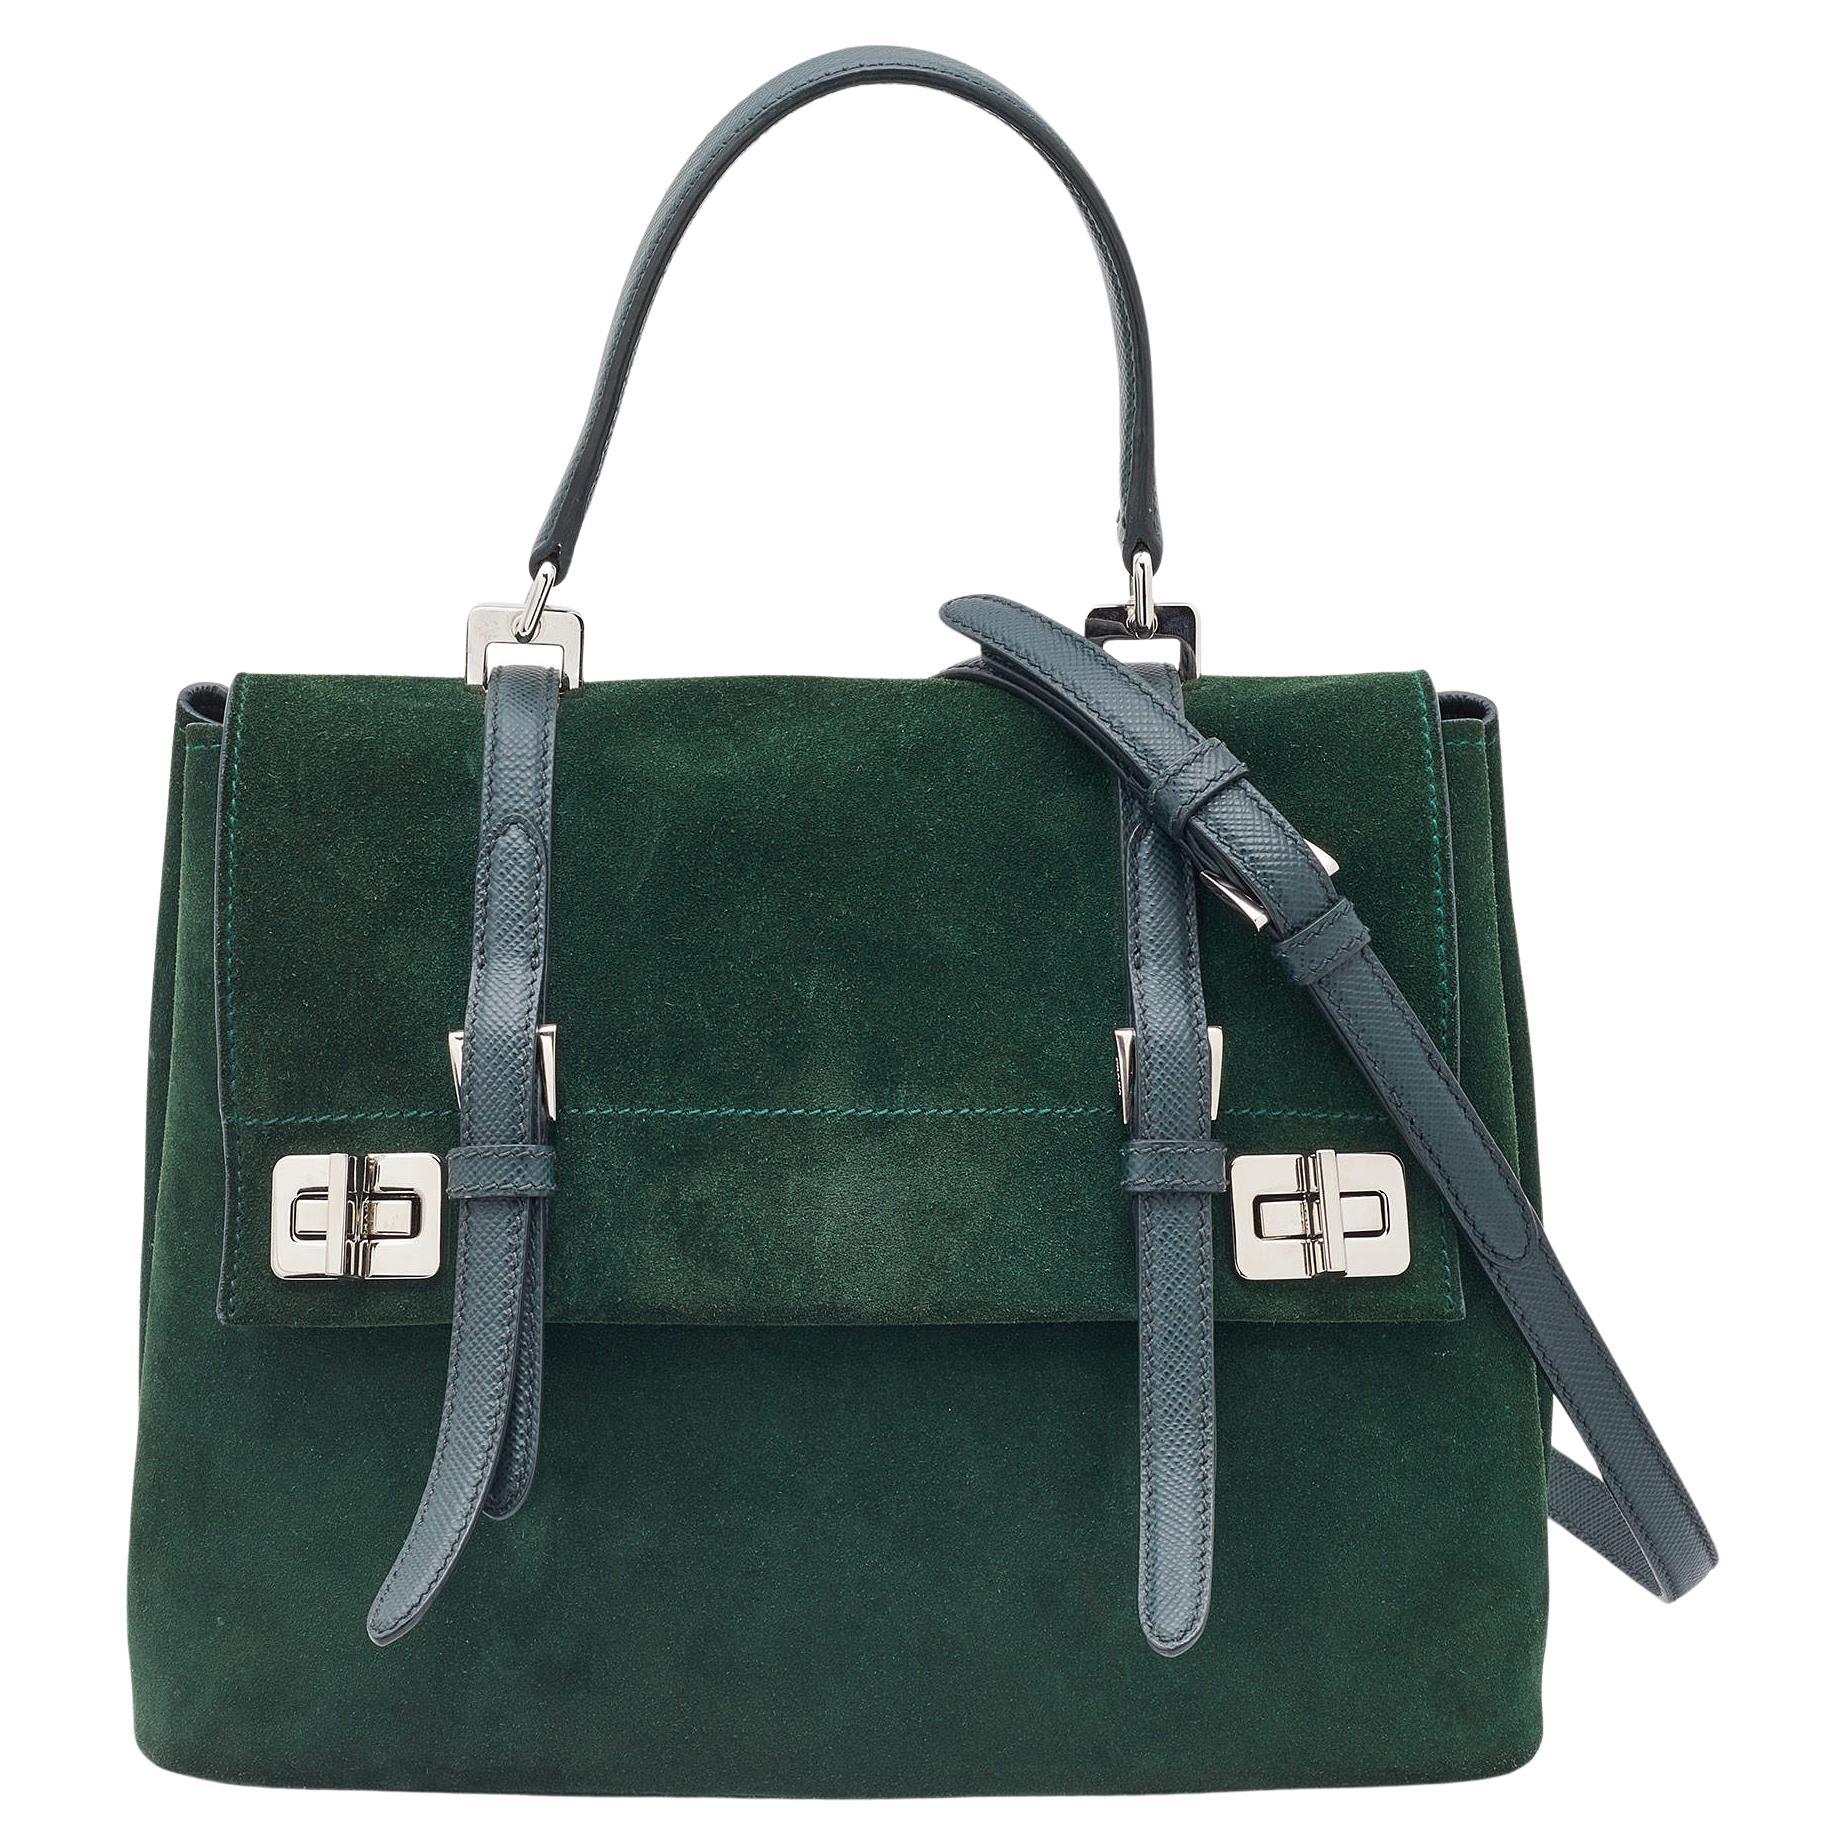 Prada Green Suede Top Handle Bag